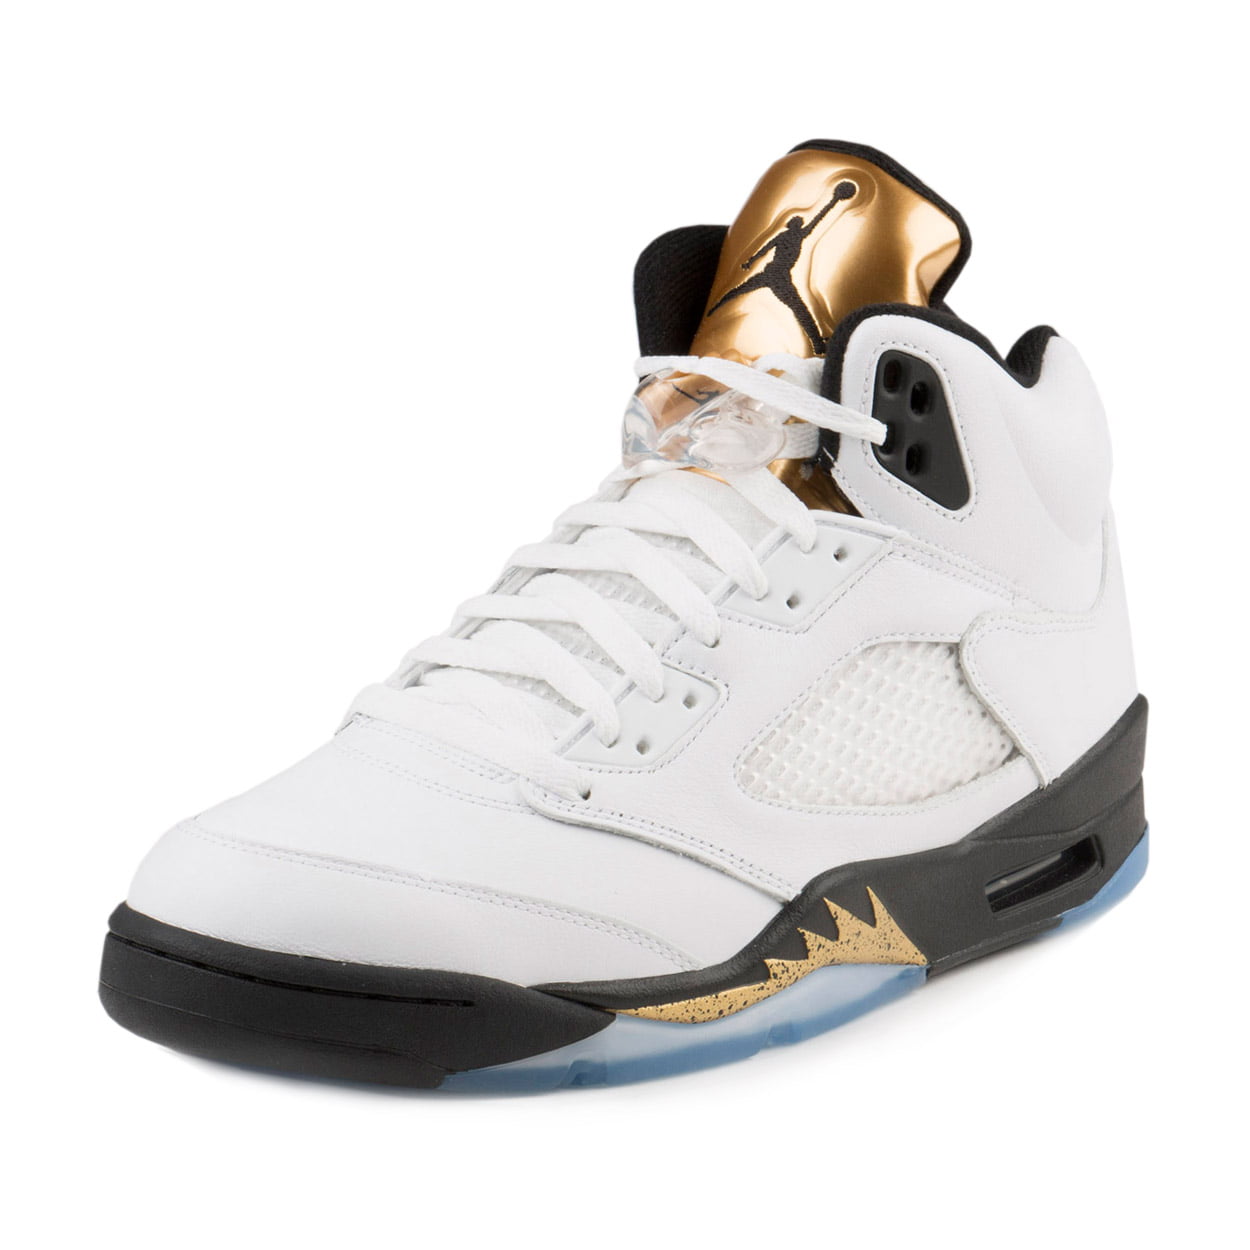 Nike Mens Air Jordan 5 Retro "Olympic" White/Black-Metallic Gold 136027